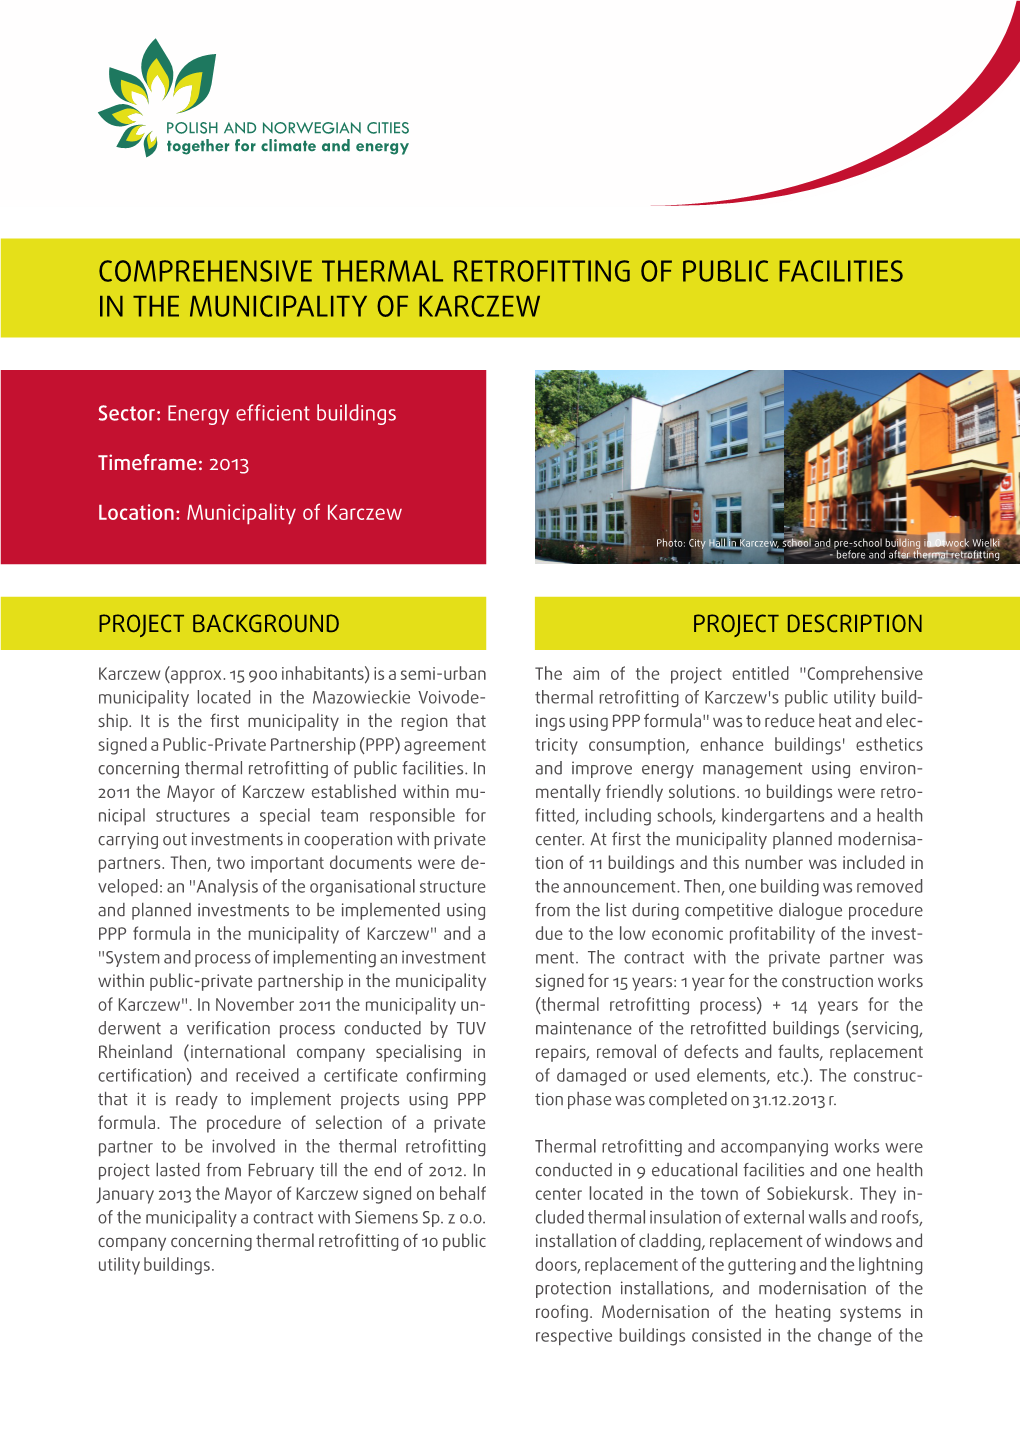 Karczew, Comprehensive Thermal Retrofitting of Public Buildings Using